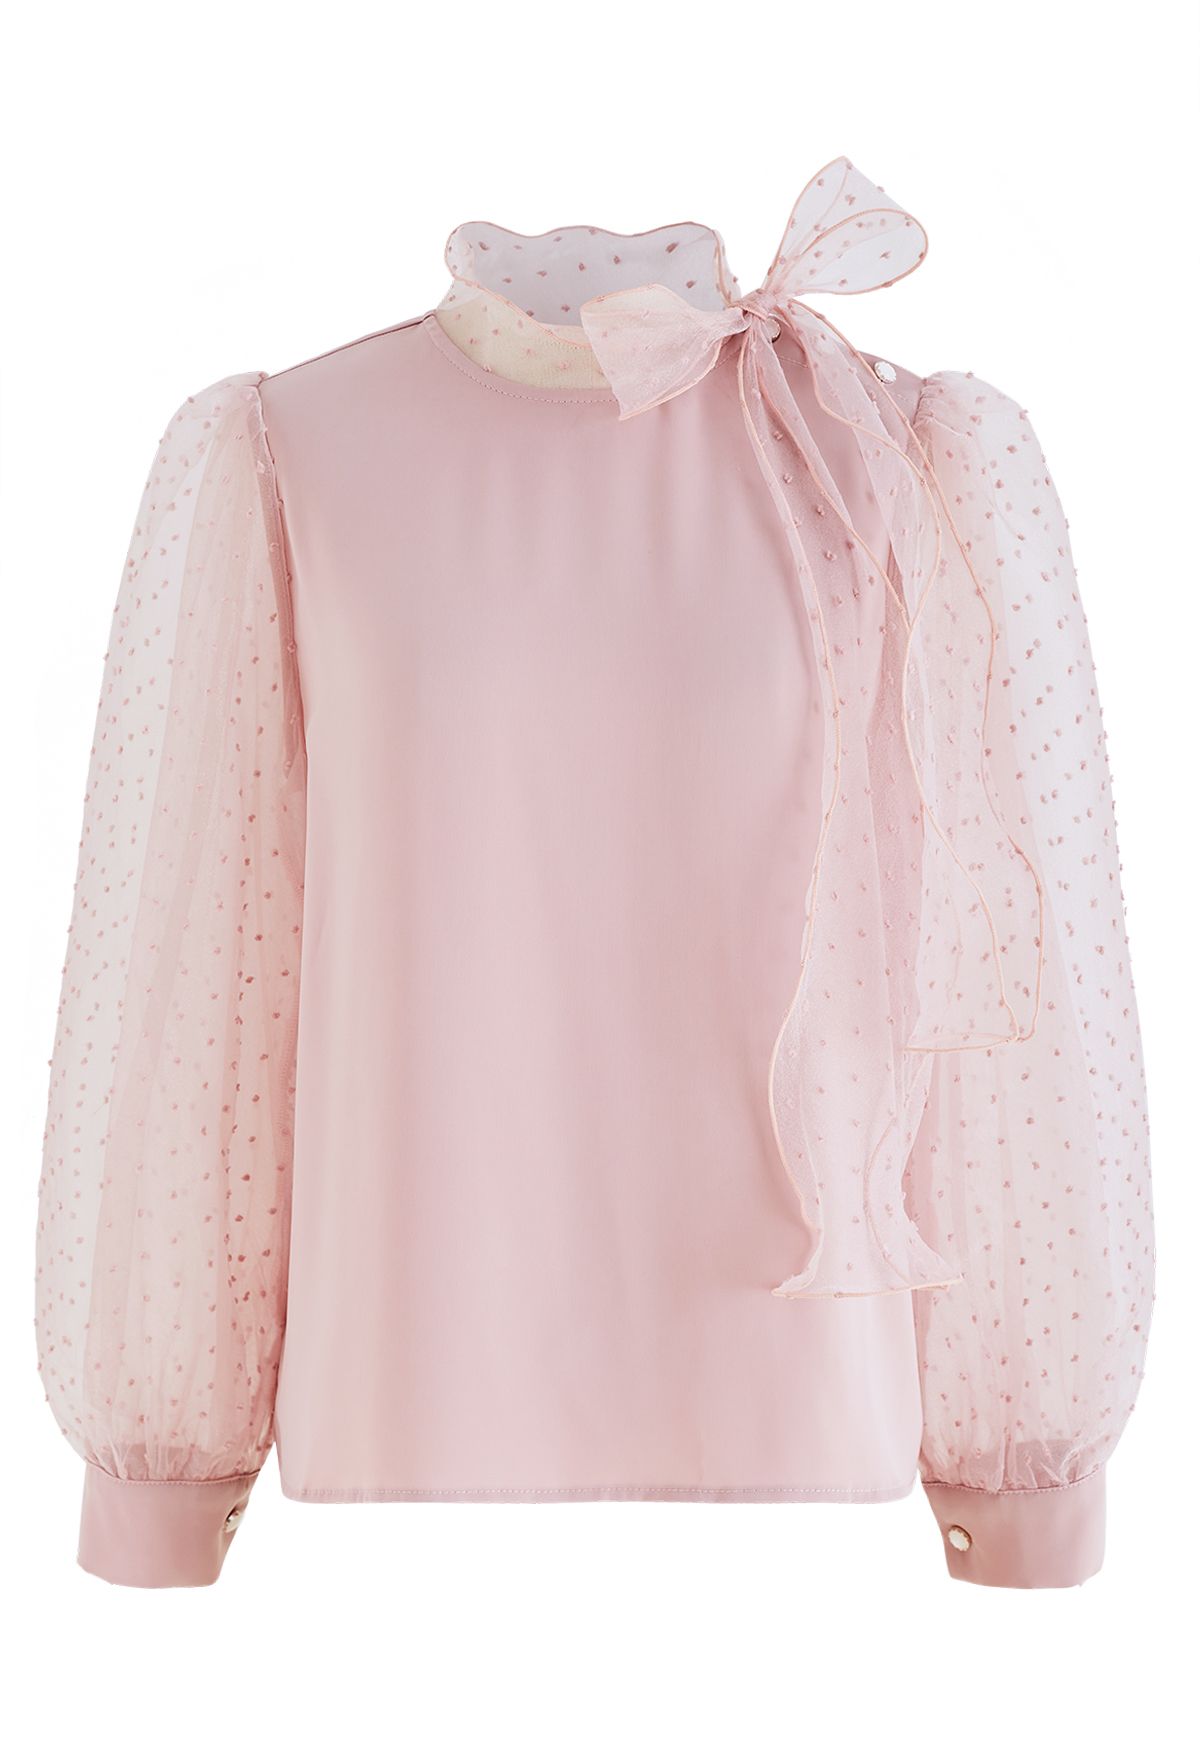 Flock Dots Organza Bubble Sleeve Bowknot Satin Shirt in Rosa